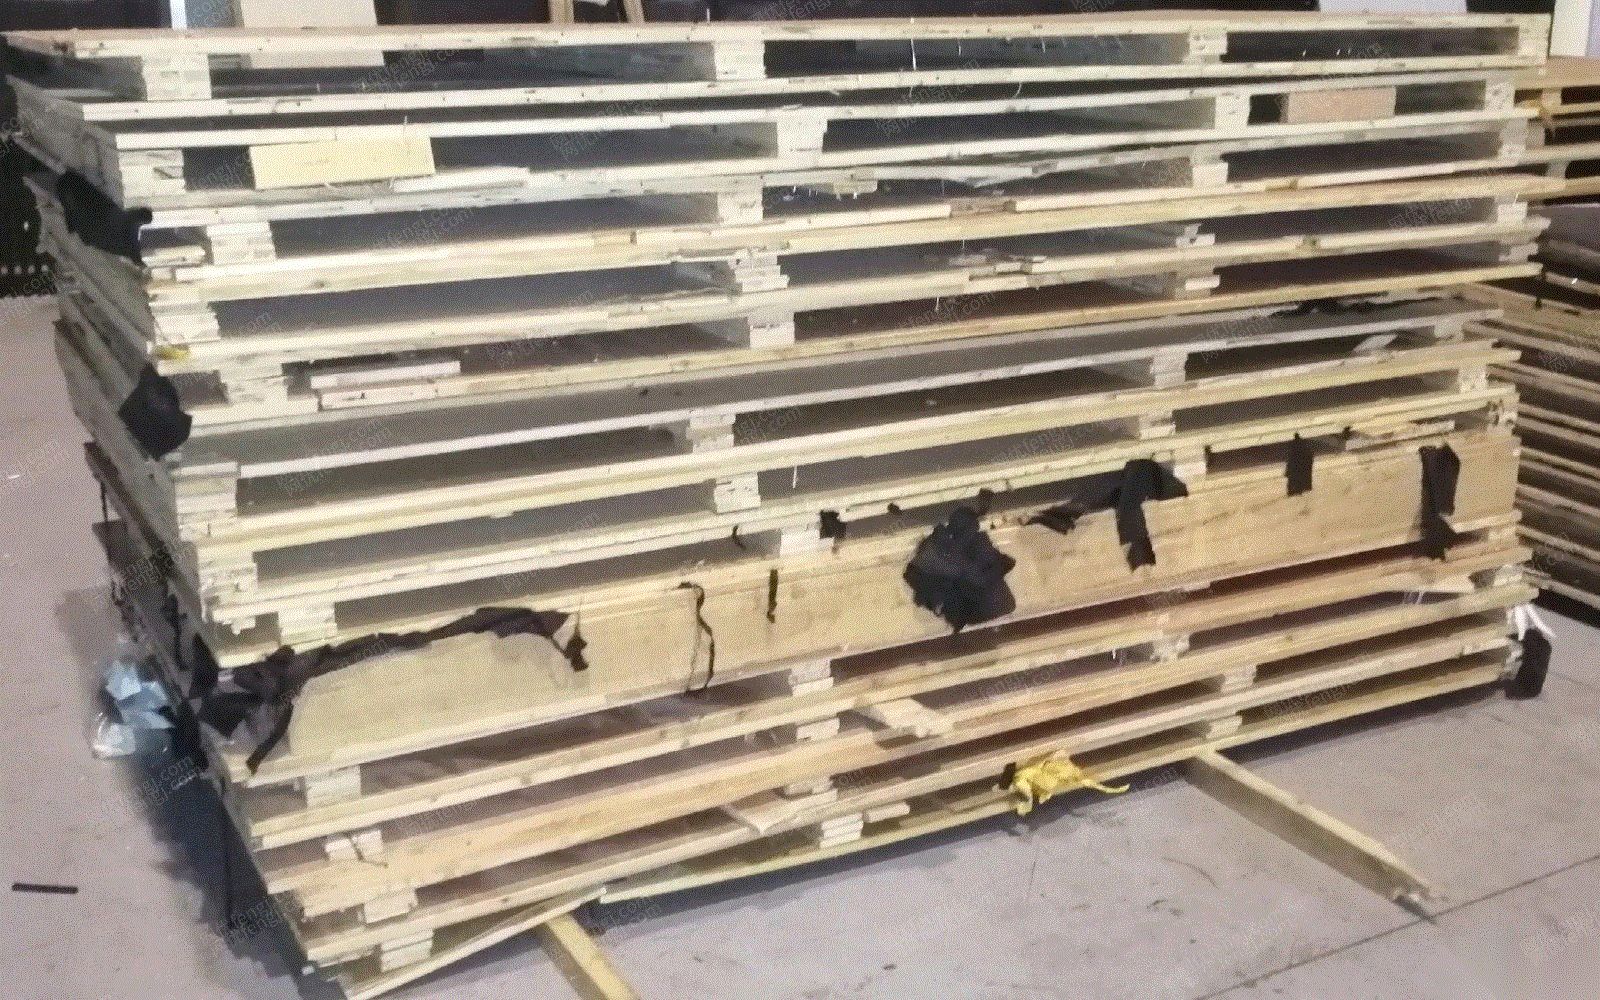 旧木材/板转让